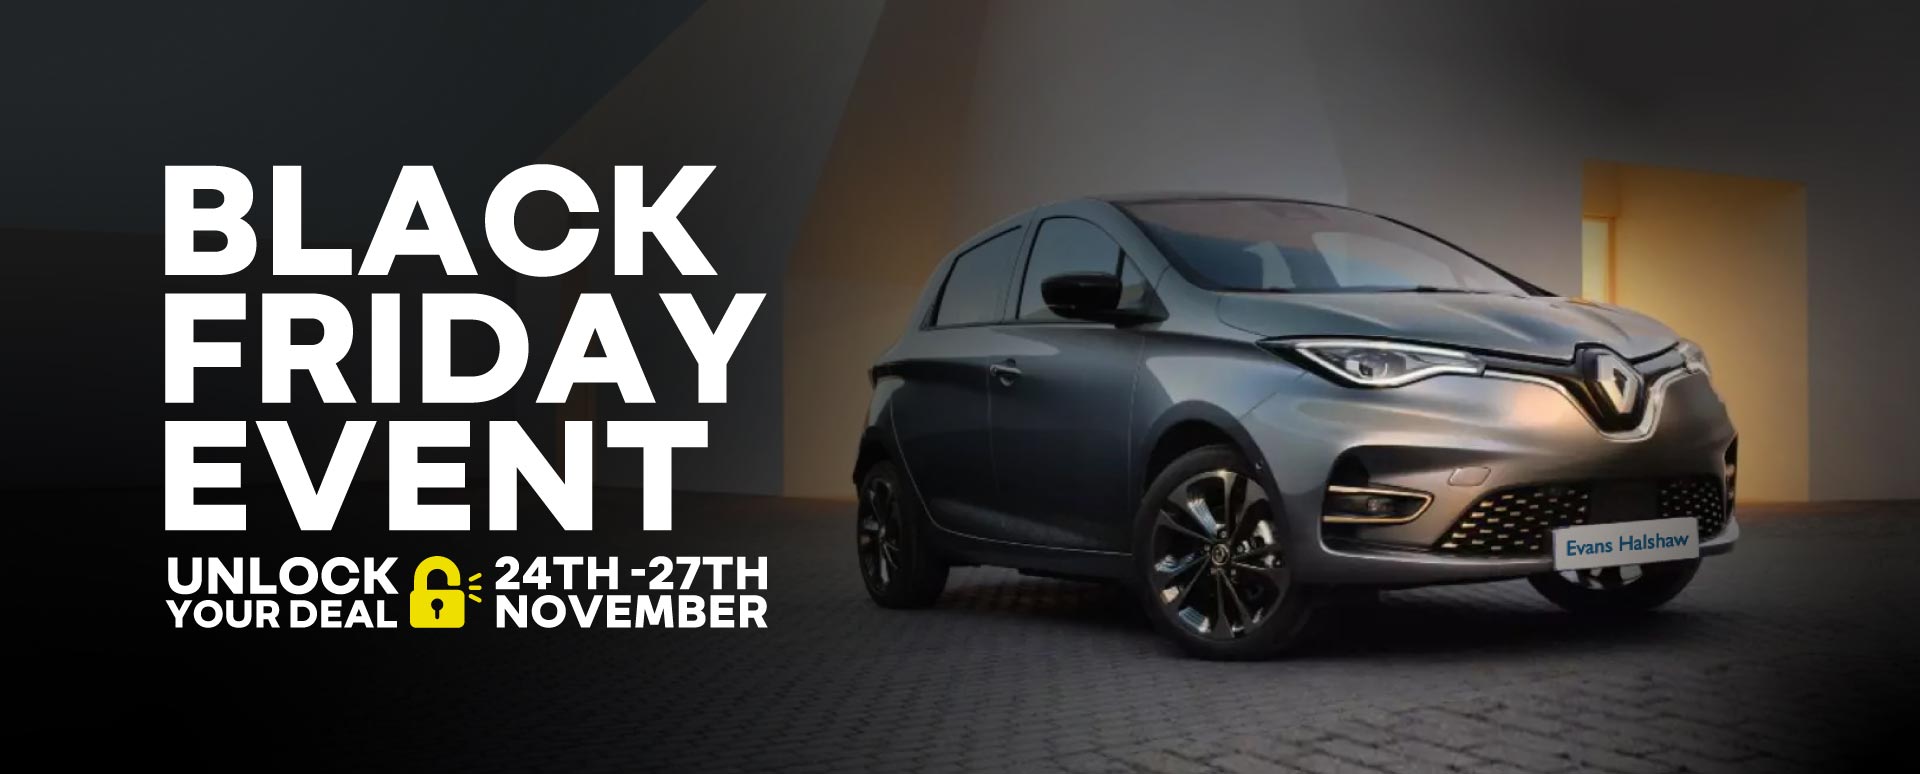 Renault Black Friday Event